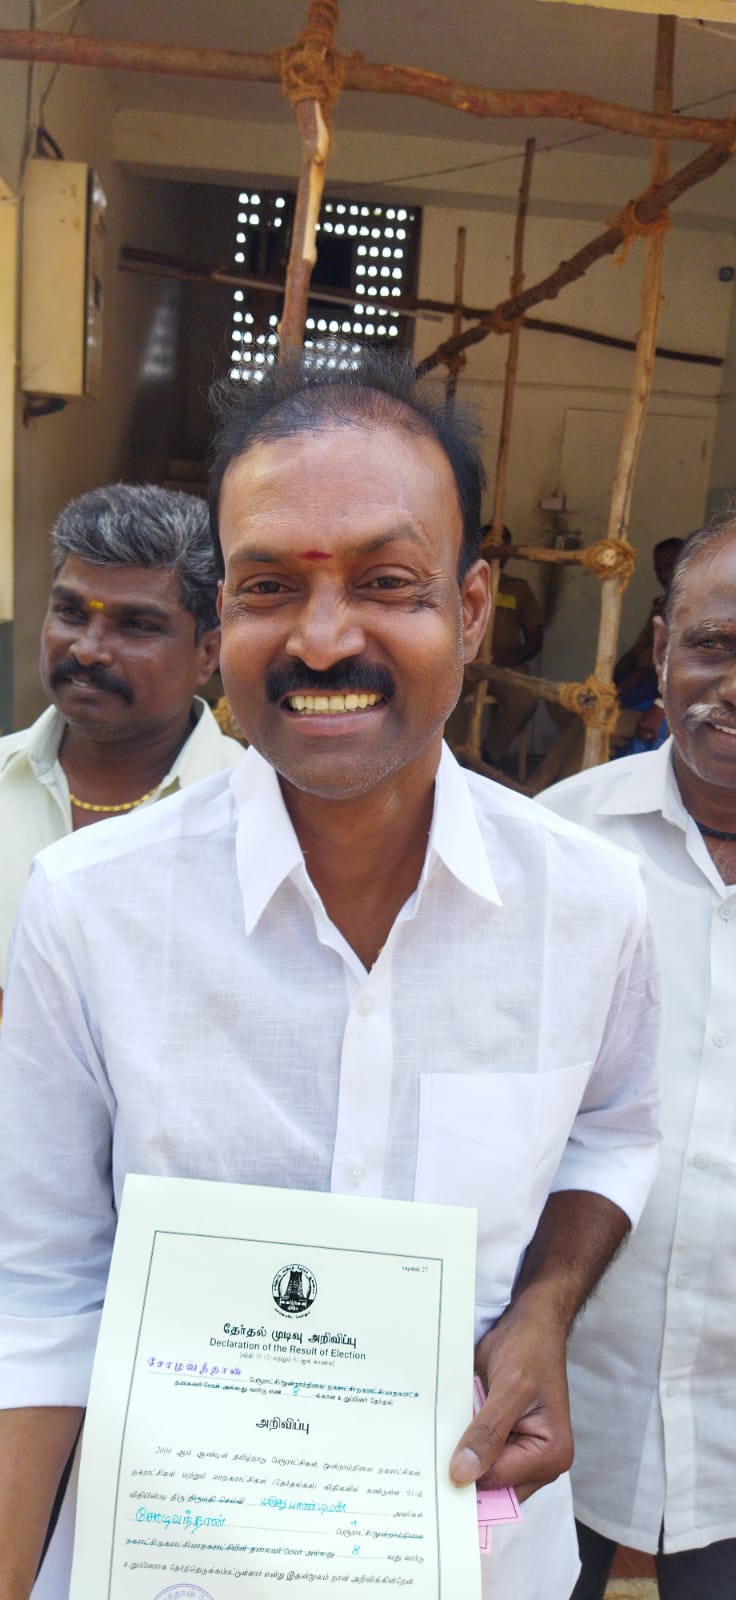 Mother and Son elected in Madurai Sozhavandhan Town Panchayat